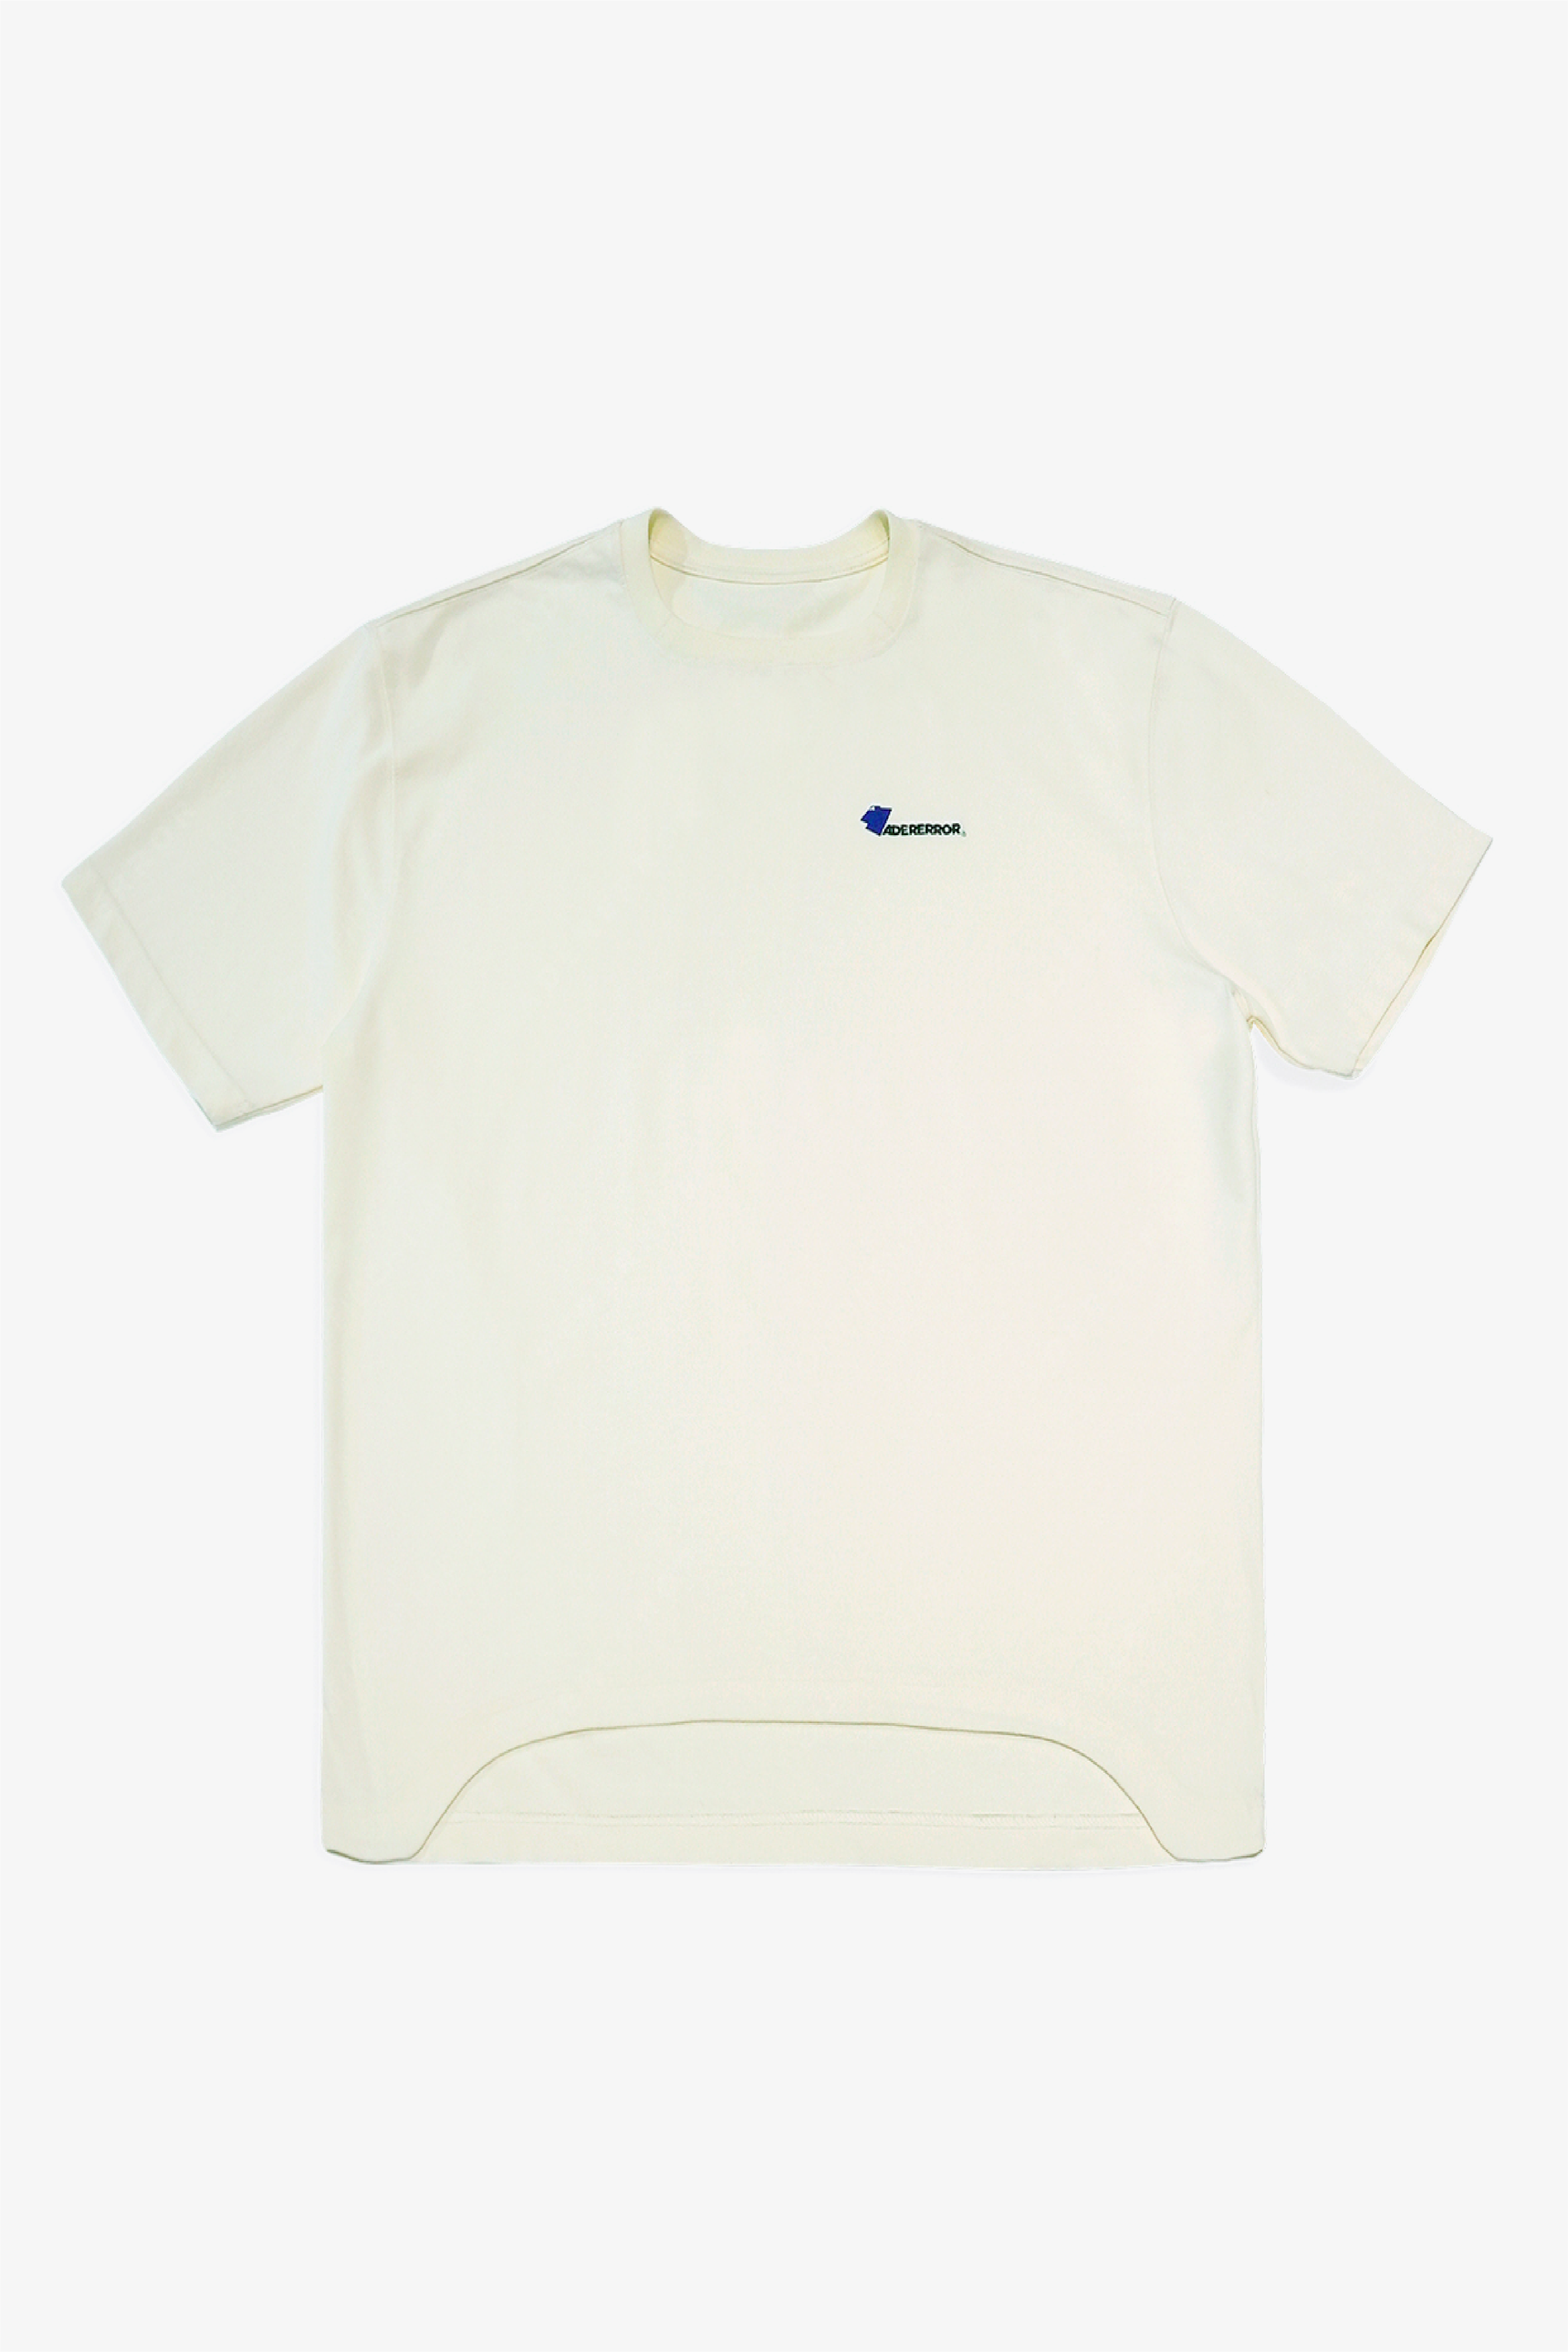 Selectshop FRAME - ADER ERROR Union Logo Tee T-Shirts Dubai